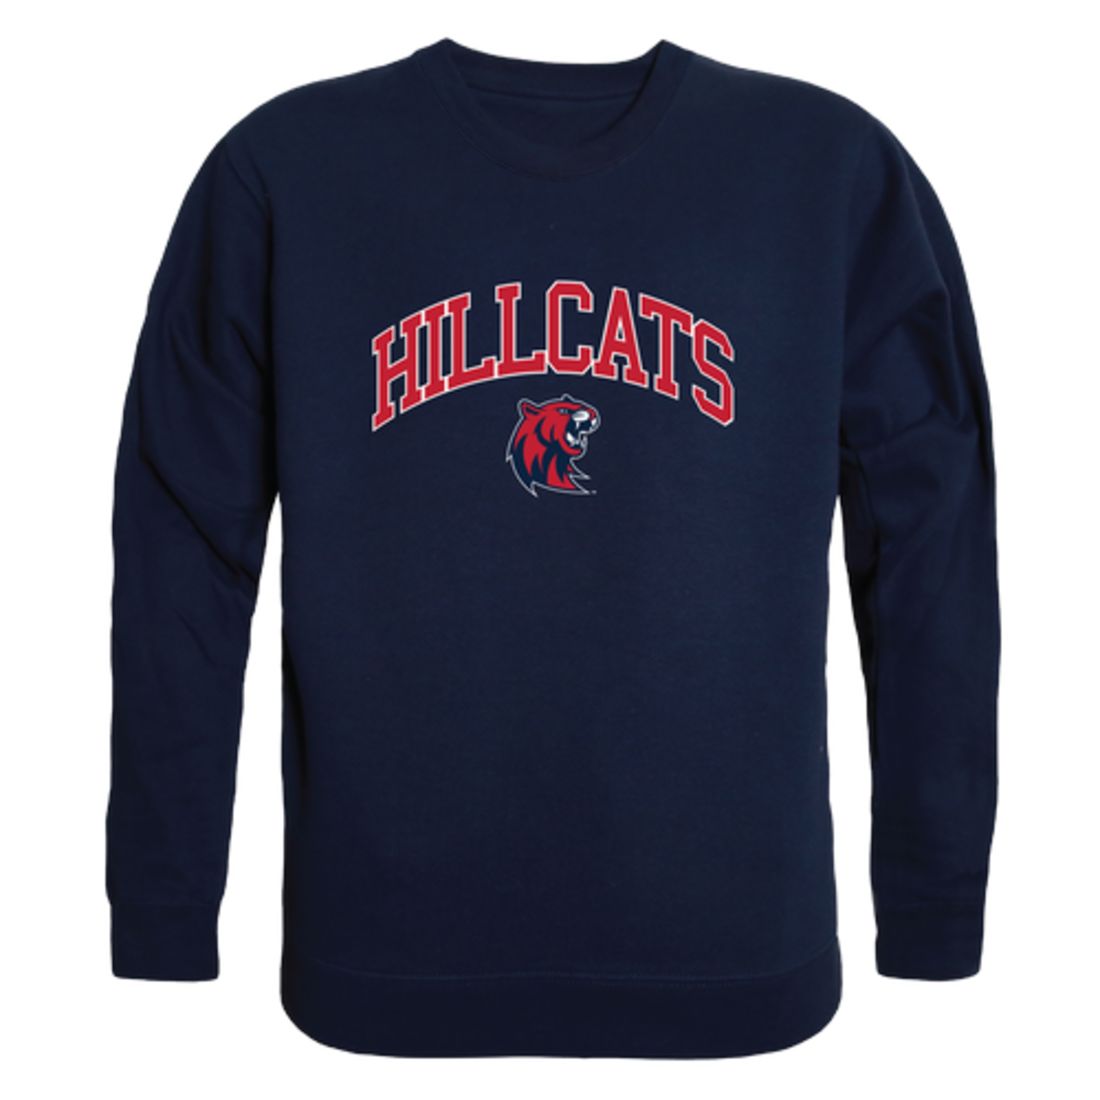 Rogers-State-University-Hillcats-Campus-Fleece-Crewneck-Pullover-Sweatshirt